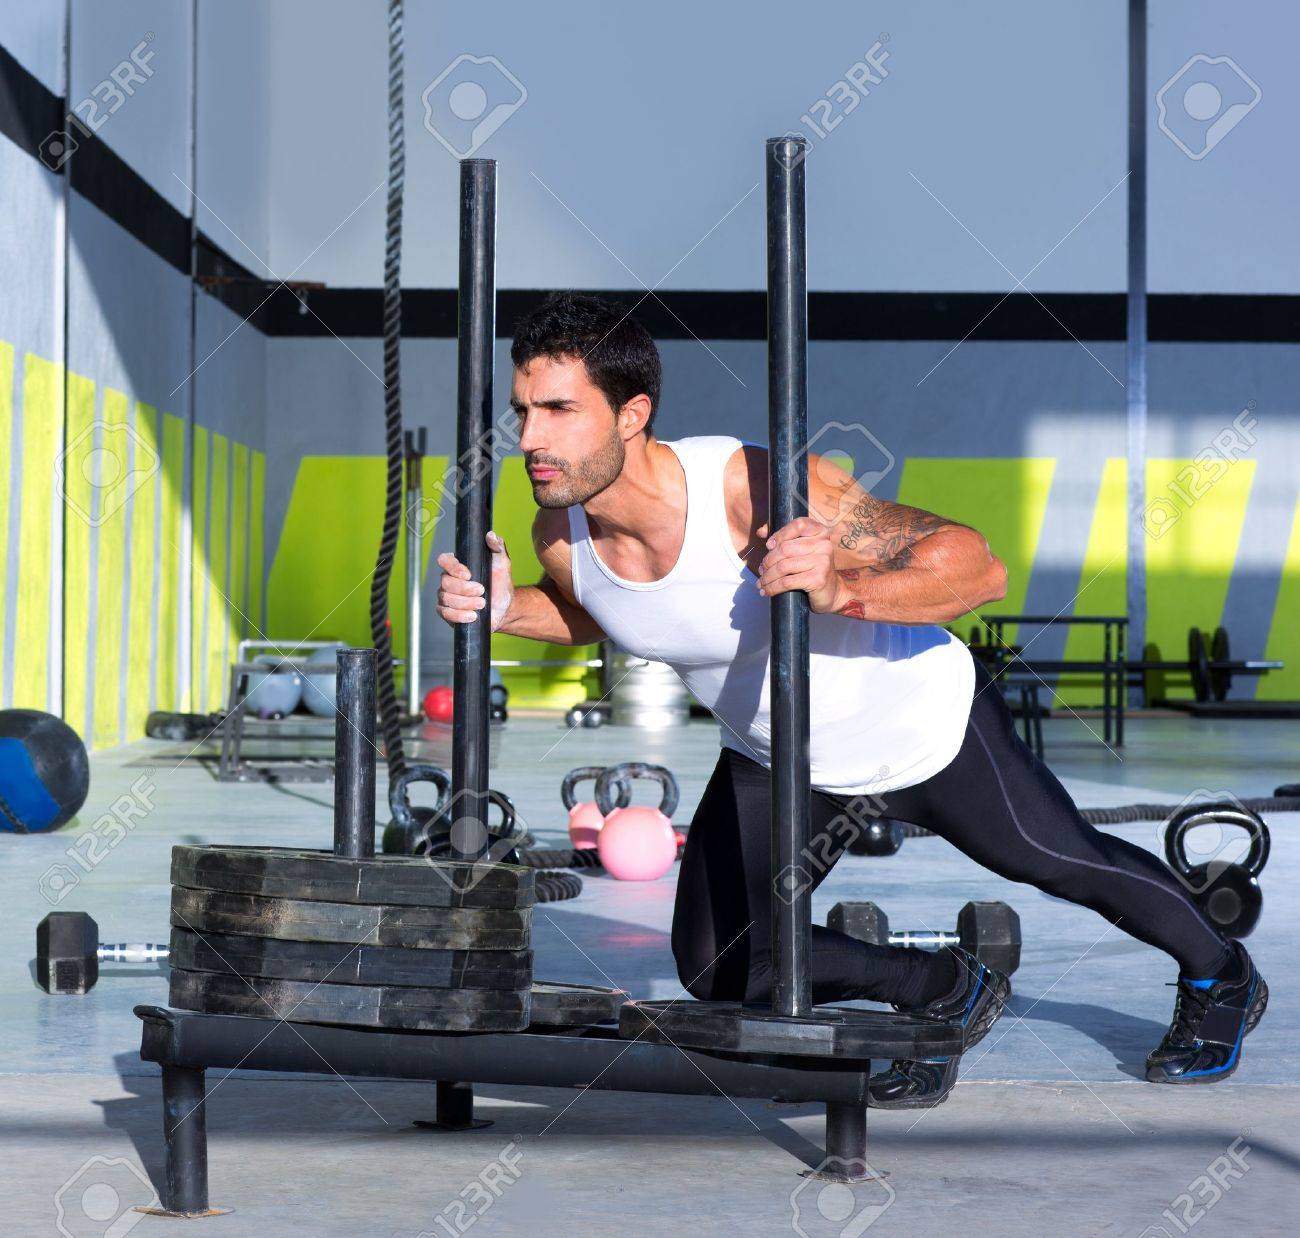 17050638-crossfit-sled-push-man-pushing-weights-workout-exercise.jpg